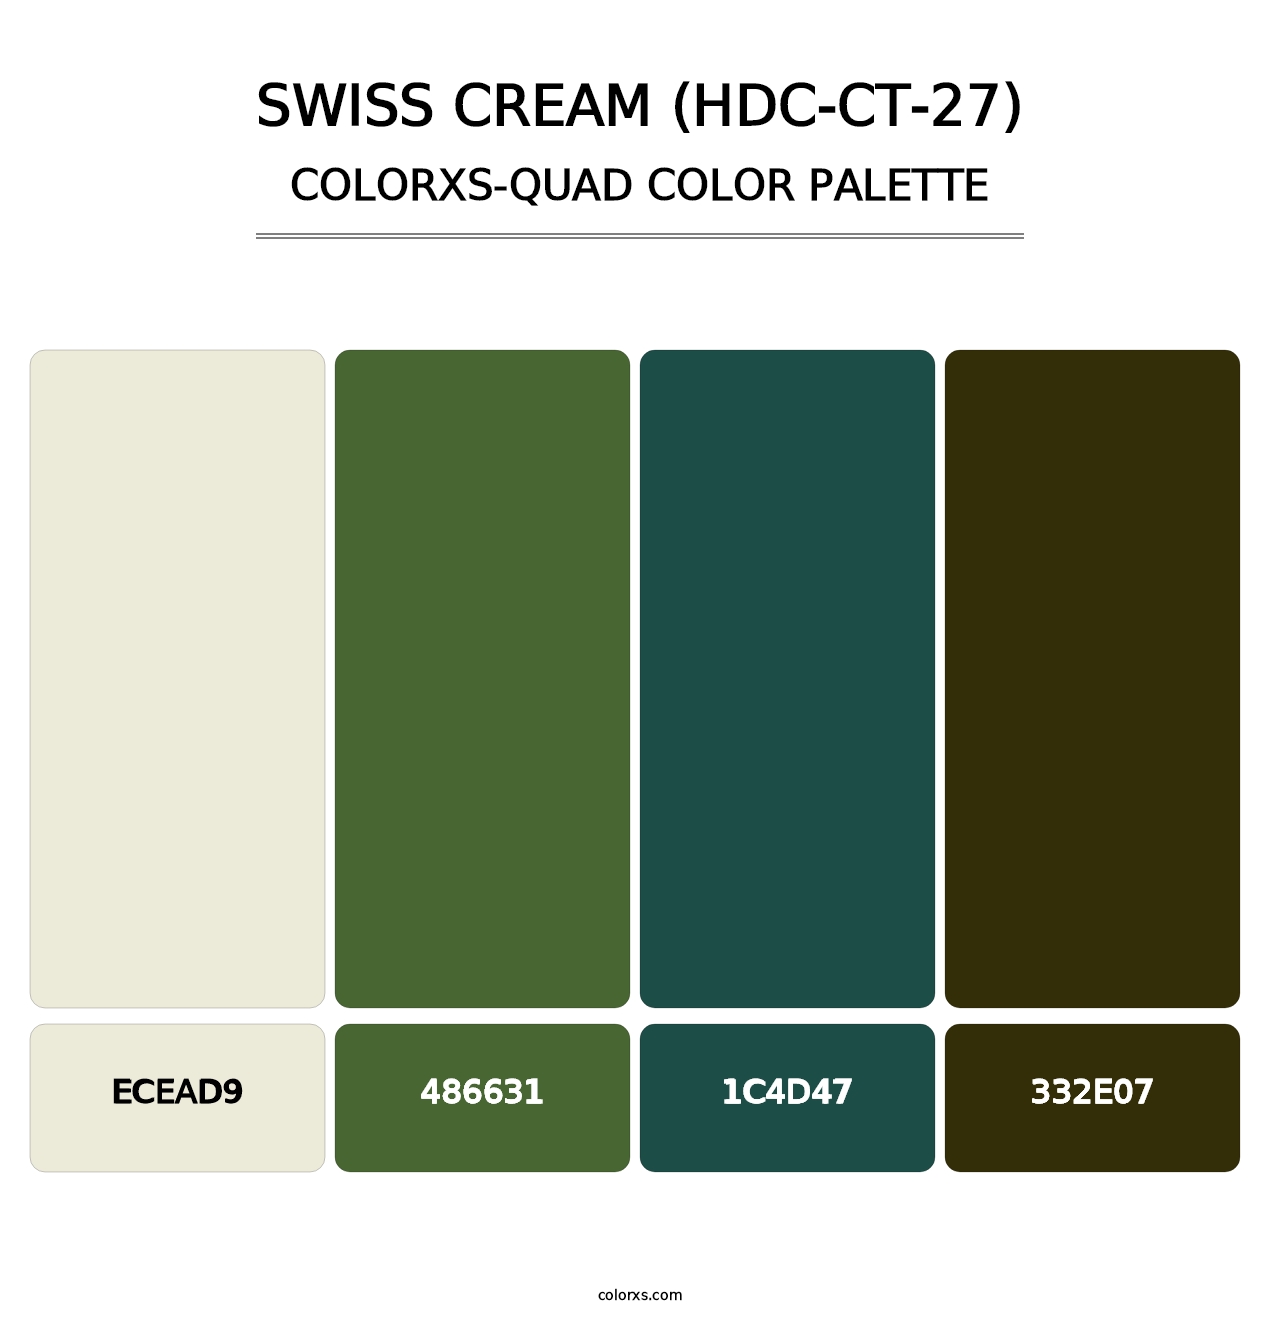 Swiss Cream (HDC-CT-27) - Colorxs Quad Palette